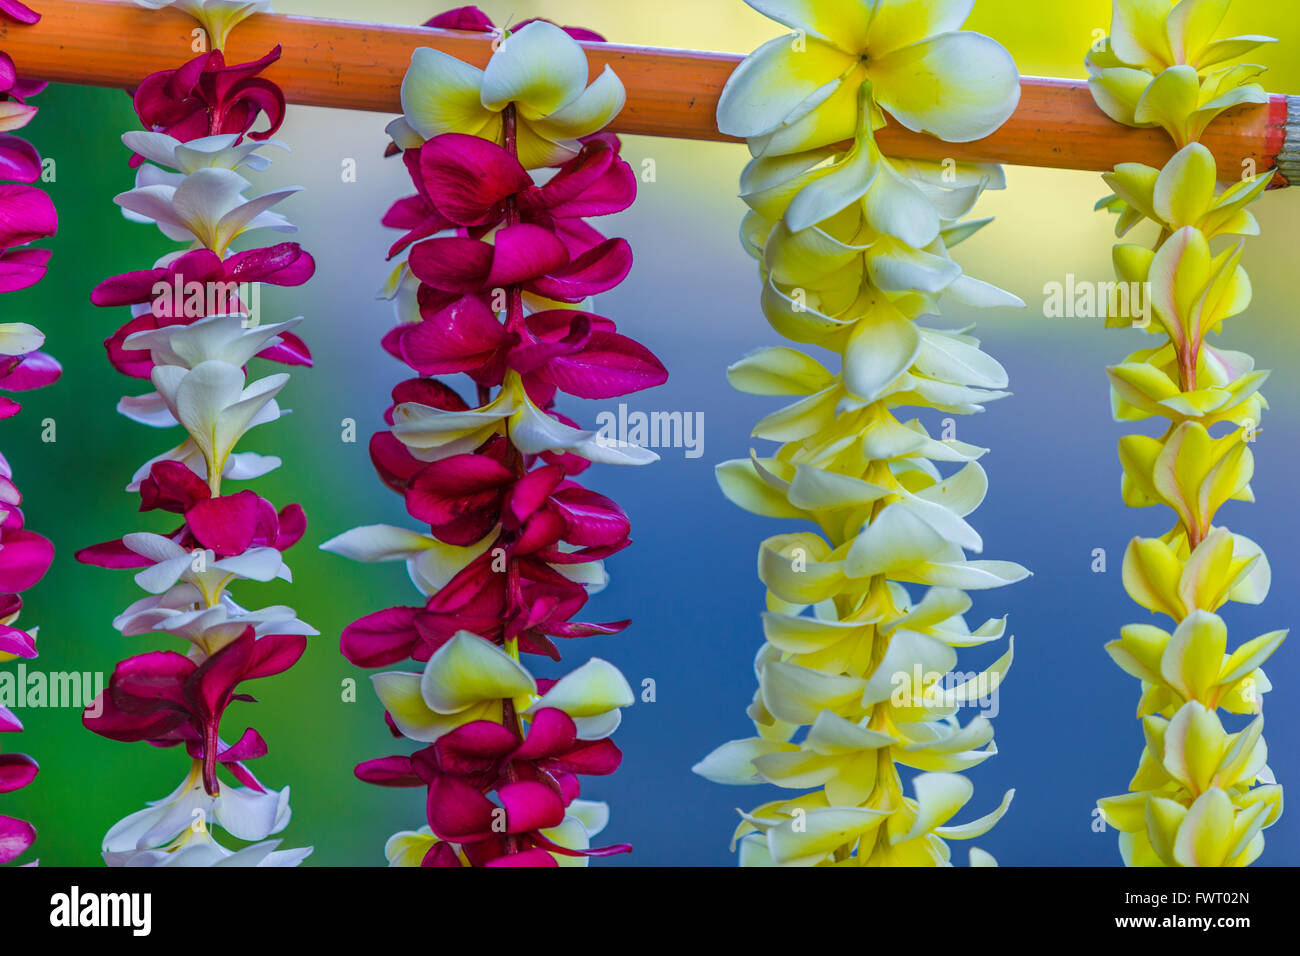 Leis for sale, Maui Stock Photo